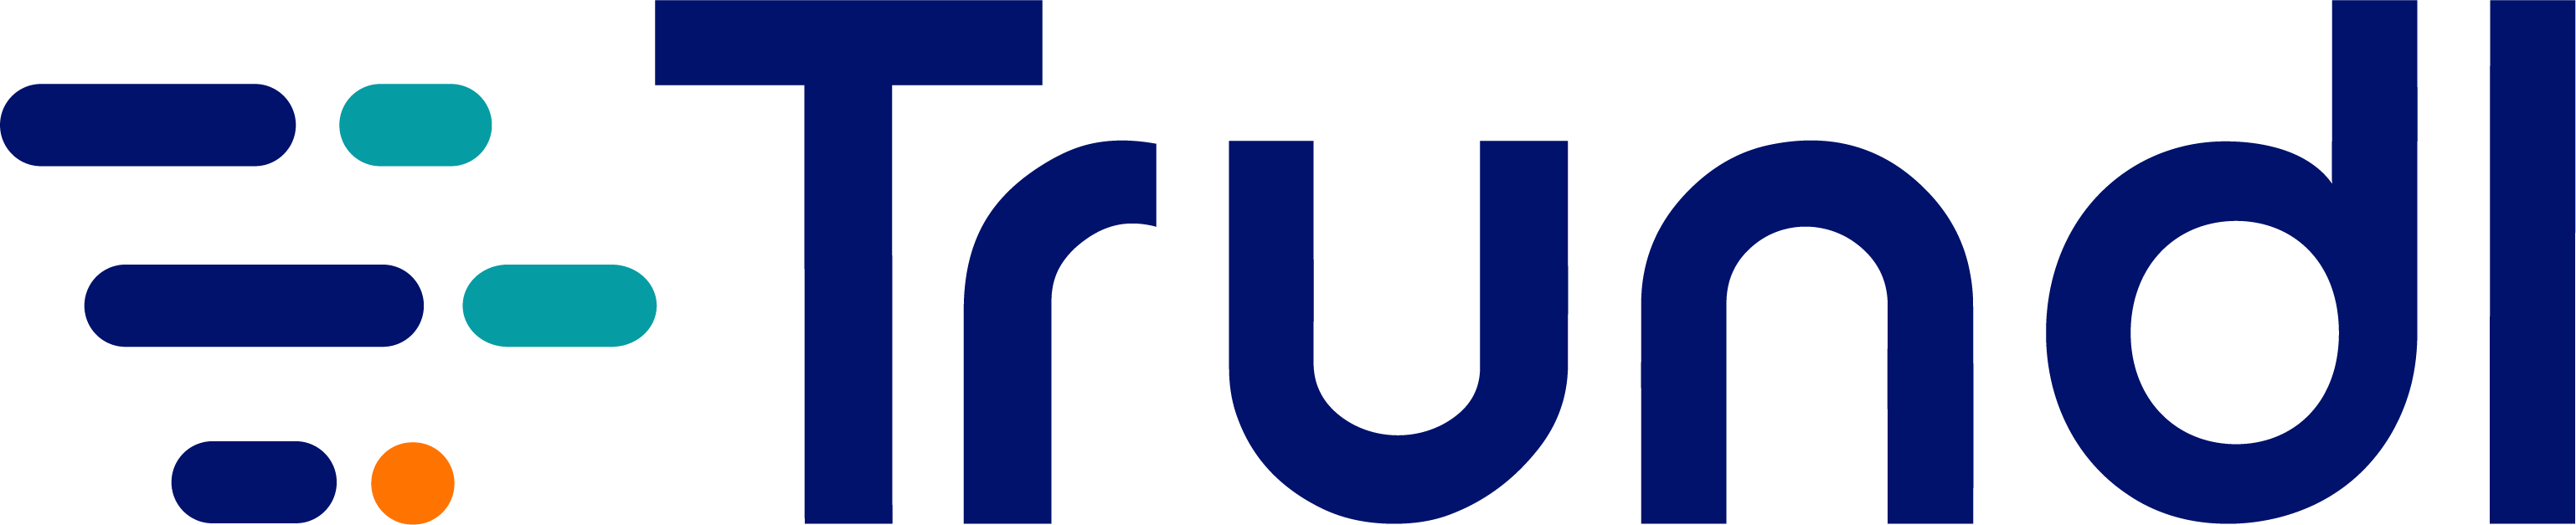 trundl logo